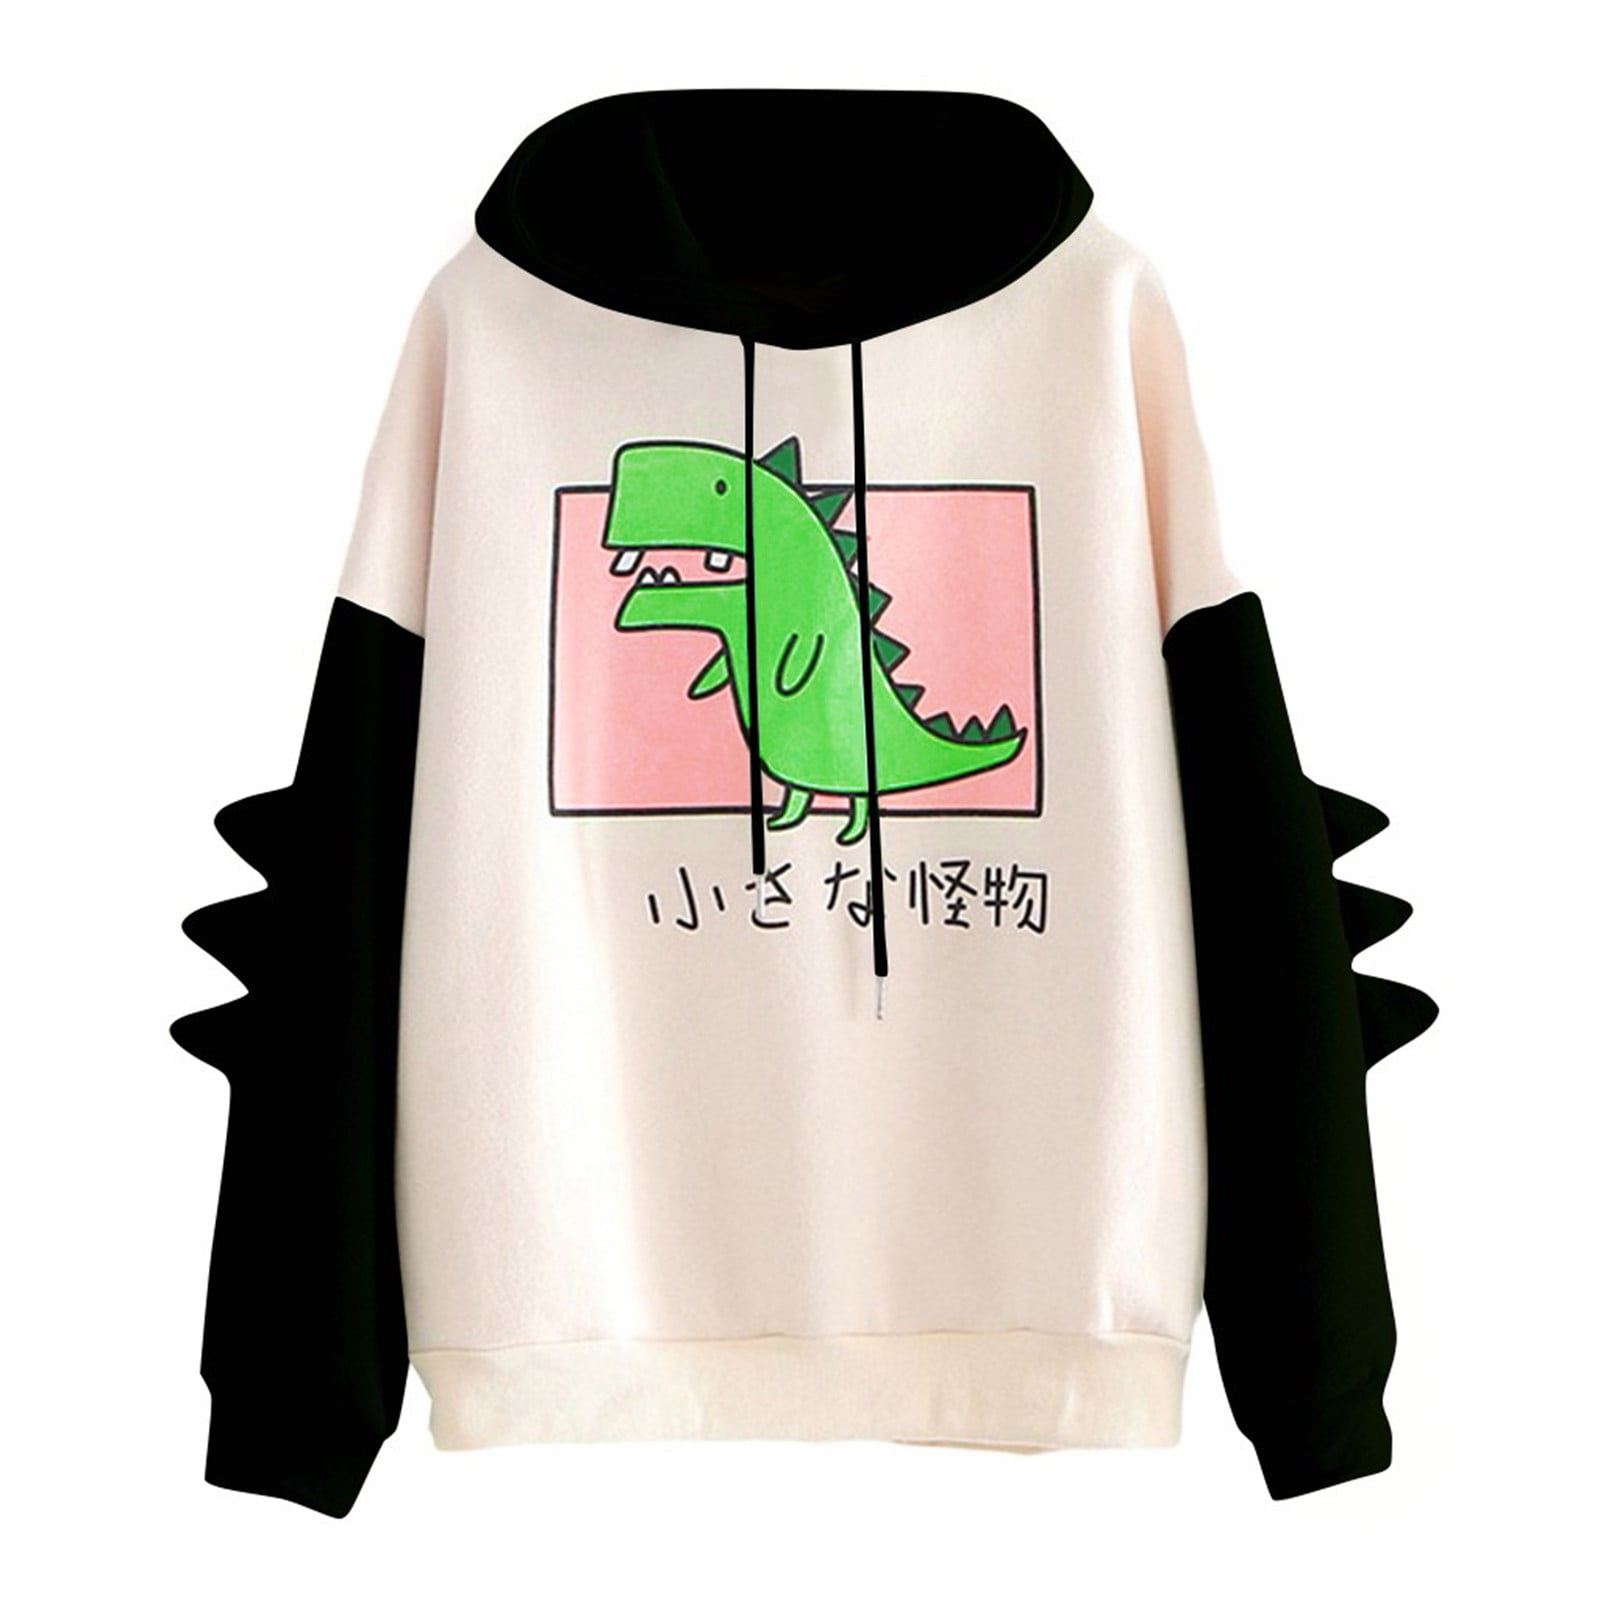 COOKI Sweatshirt for Women Women's Animal Printed Long Sleeve Pullover TopsBlouse Casual Sweatshirts for Teen Girls